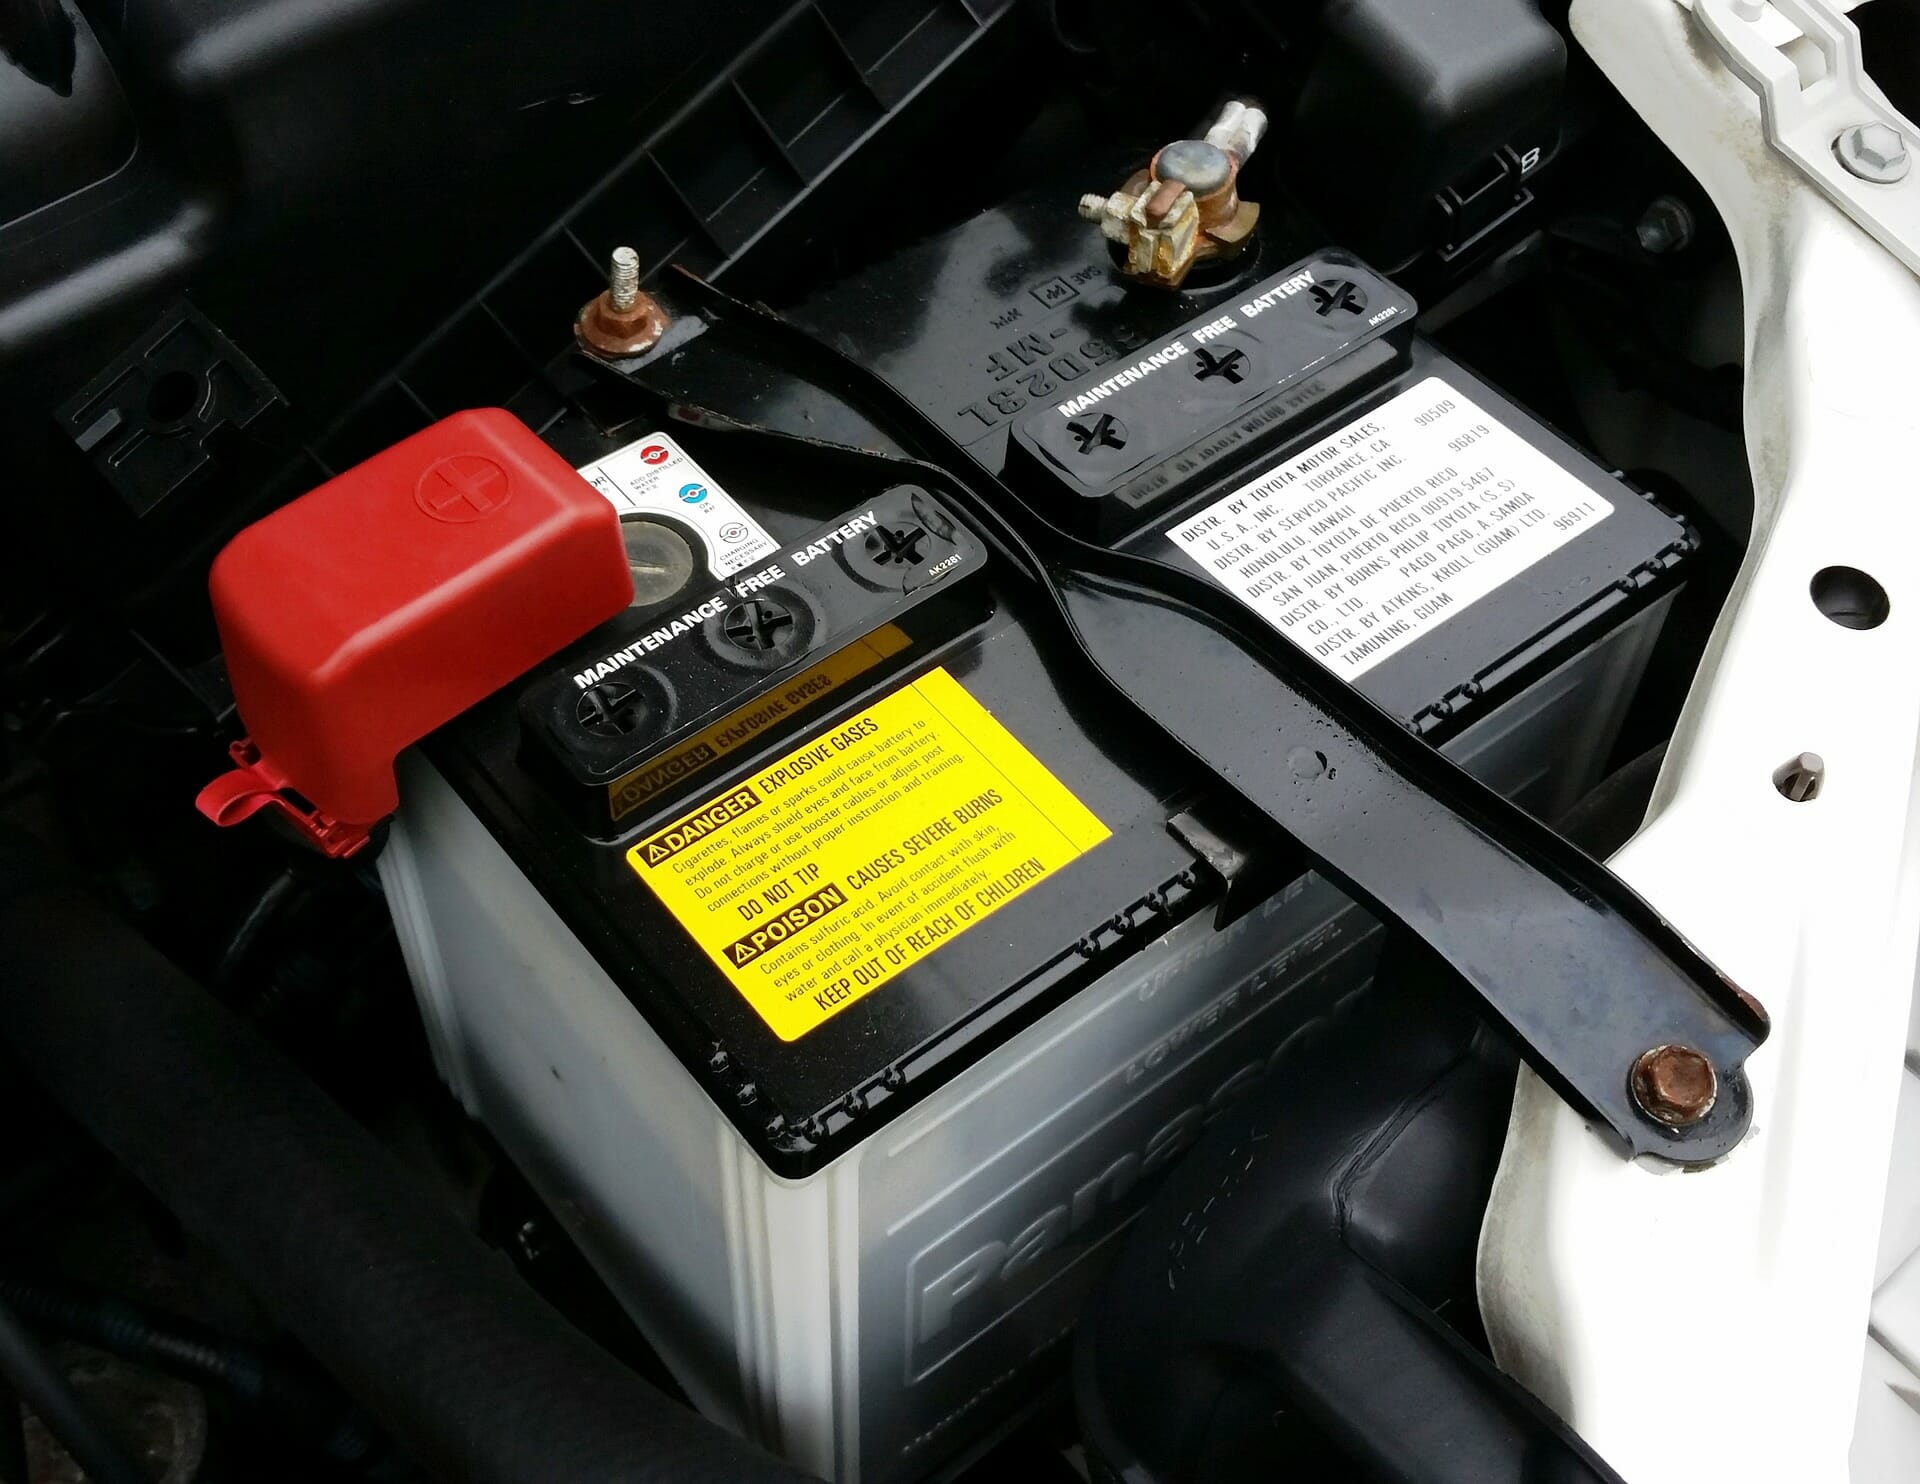 Ford Fusion hybrid battery Lebanon, VA